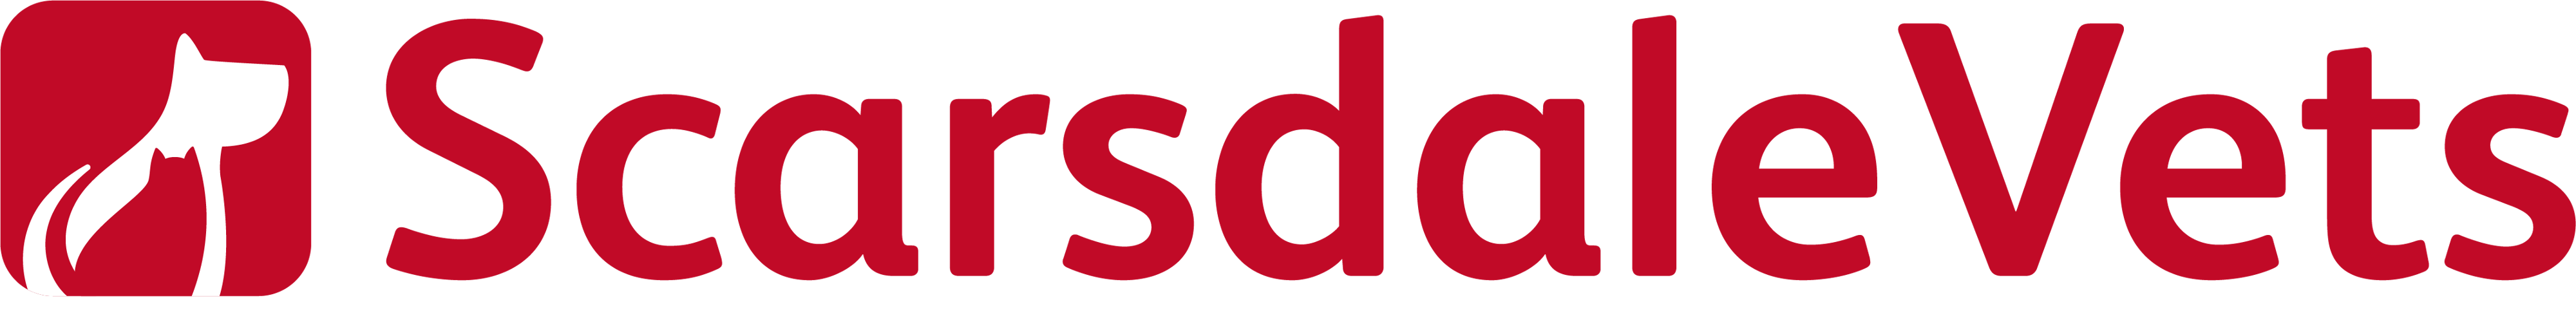 Scarsdale Logo